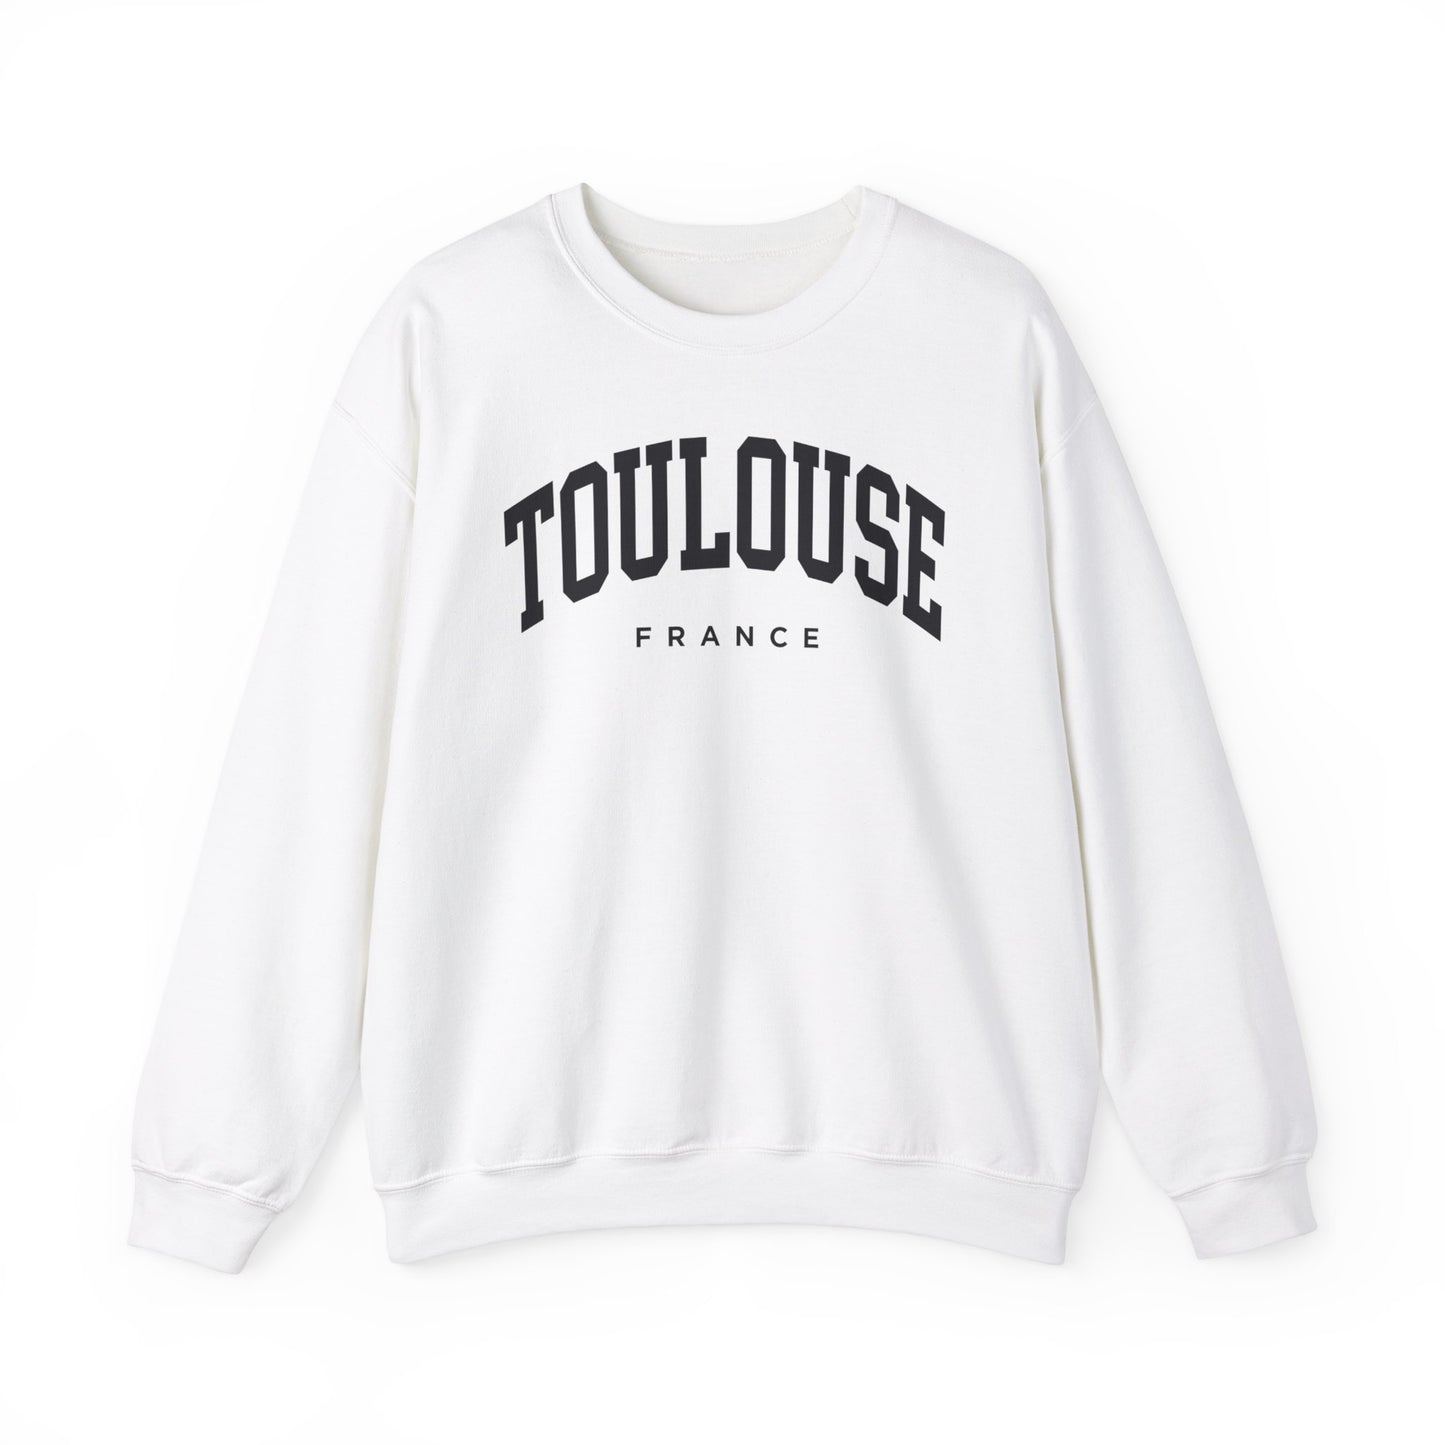 Toulouse France Sweatshirt